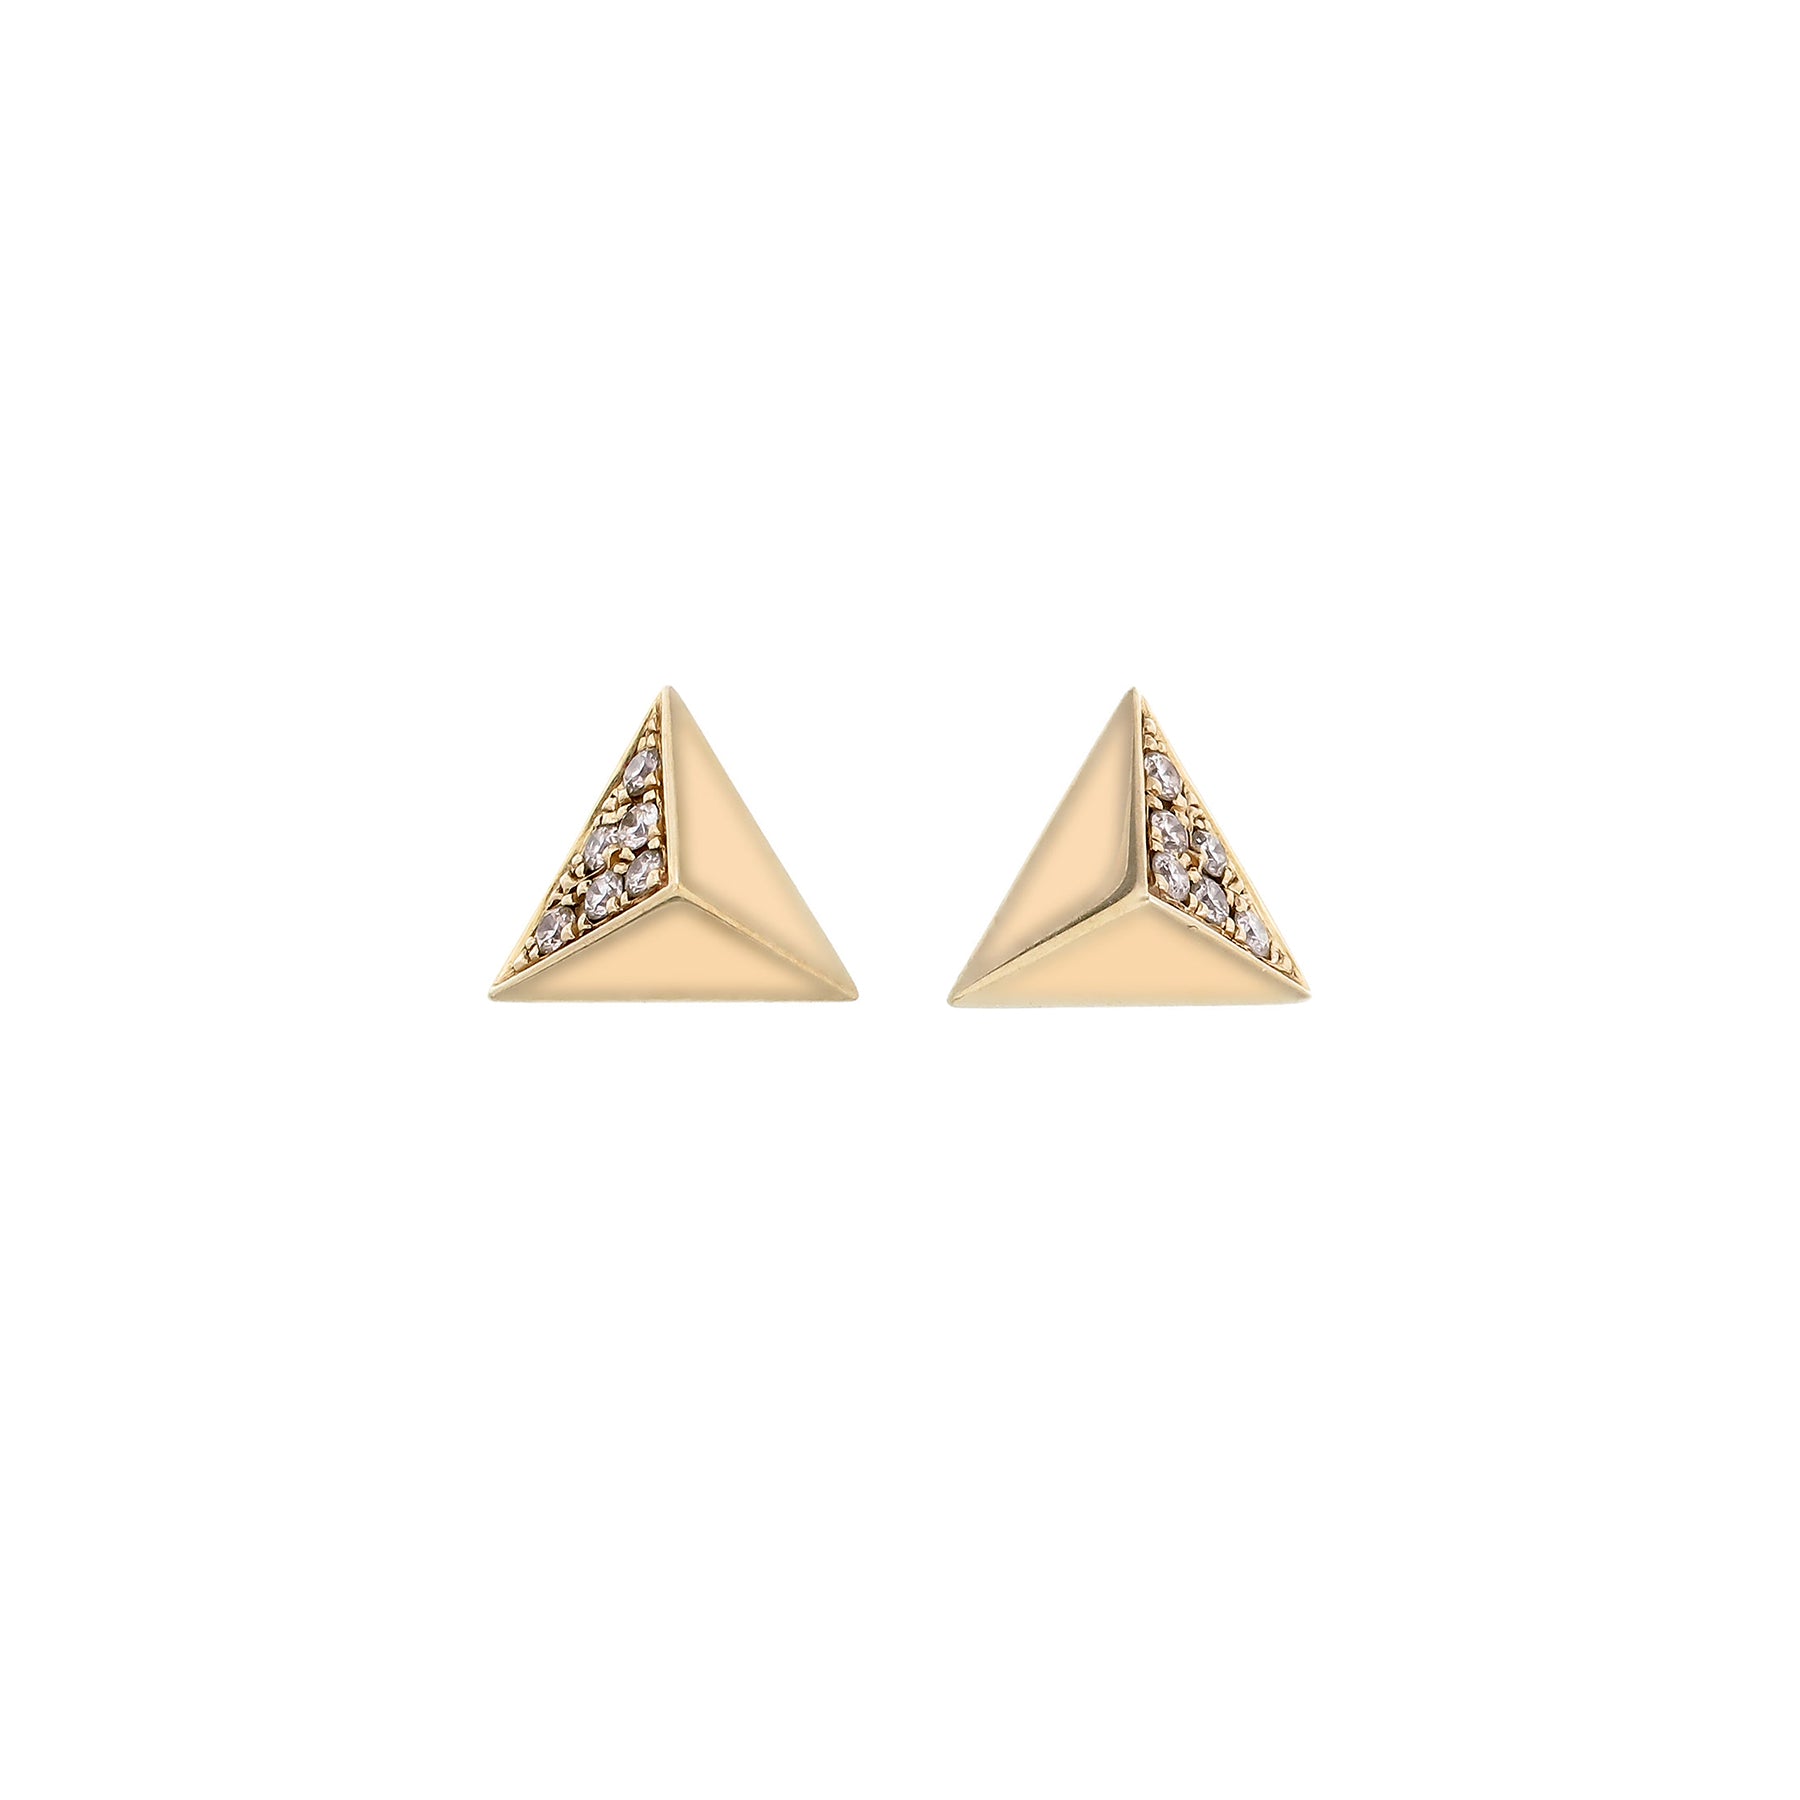 Three-Tone Four Sided Diamond Pyramid Studs